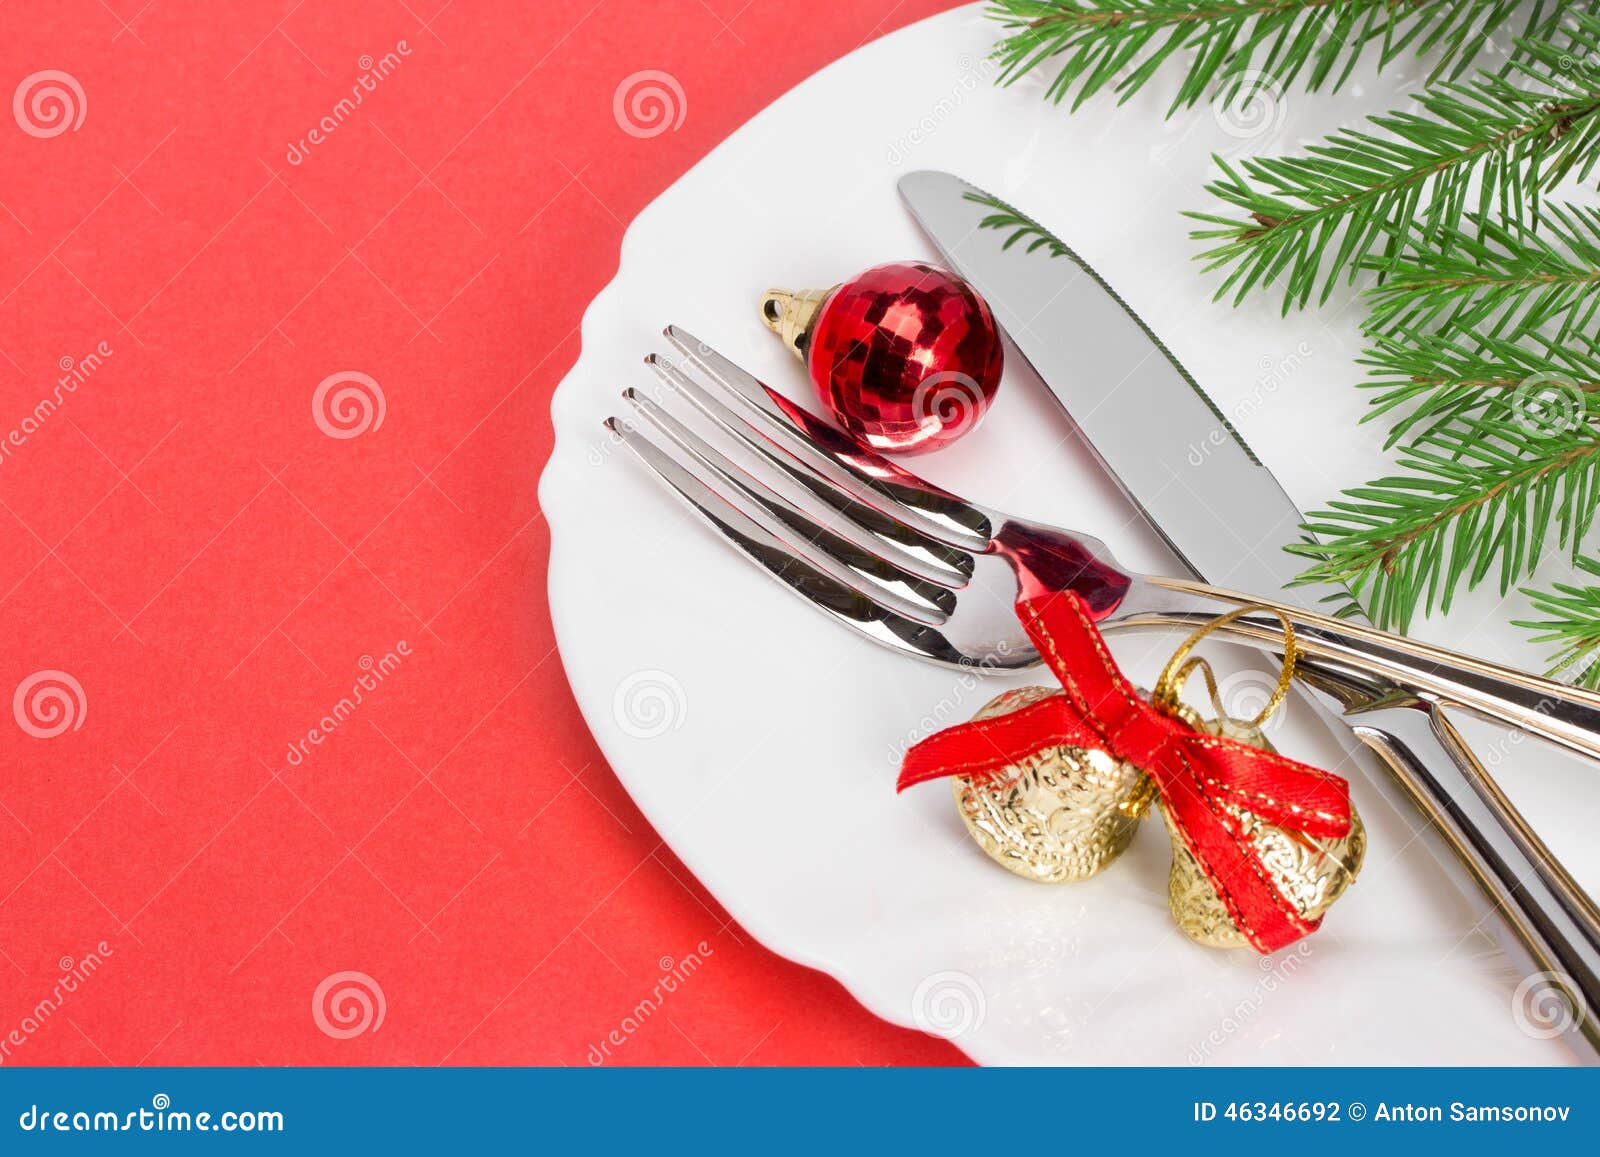 Christmas plate stock photo. Image of dinner, holiday - 46346692